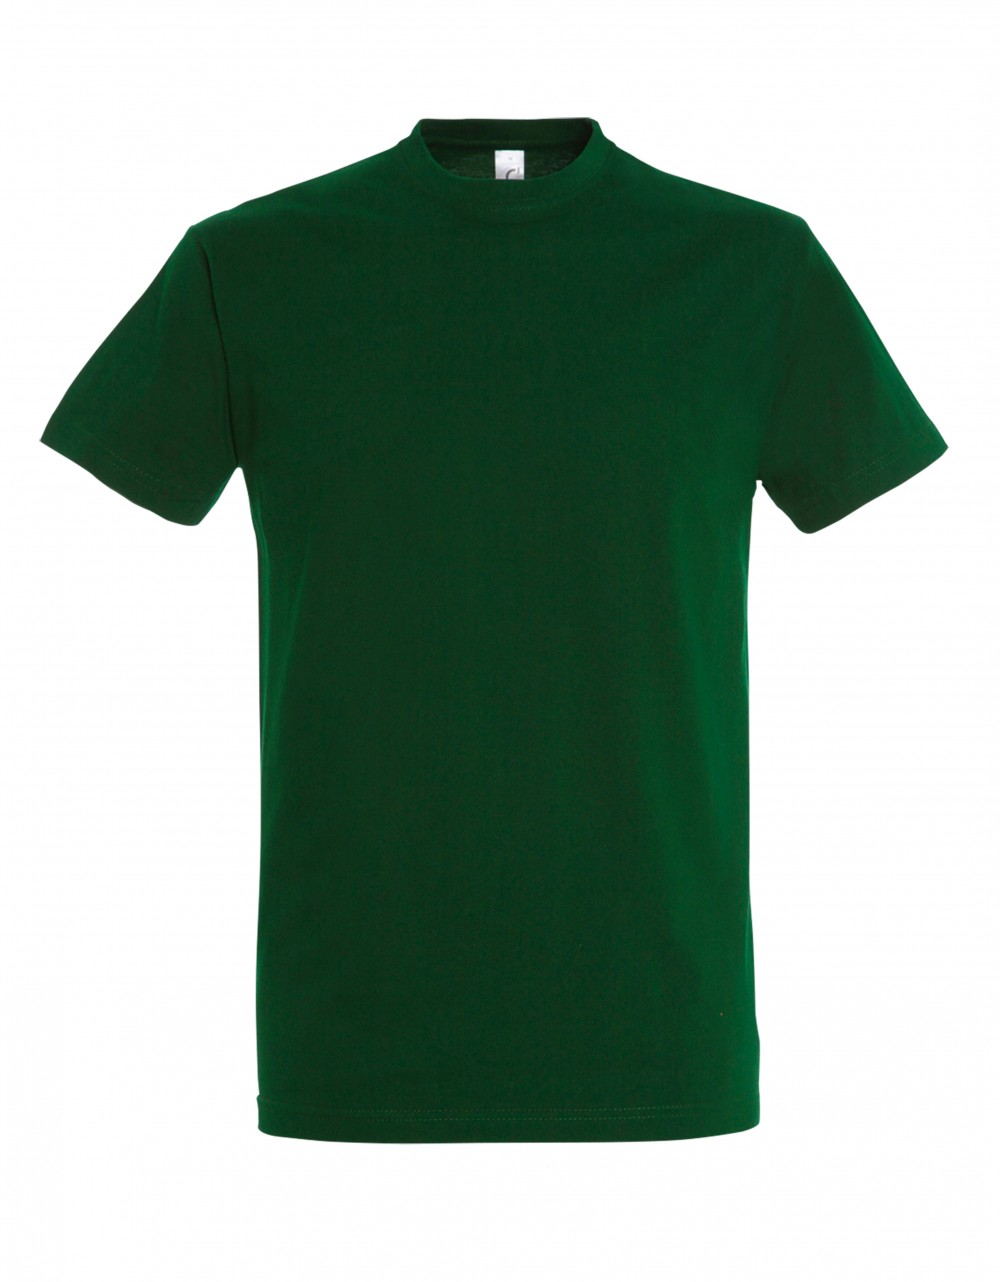 Imperial t-shirt|T-shirts| Concept Fardas - Short sleeve